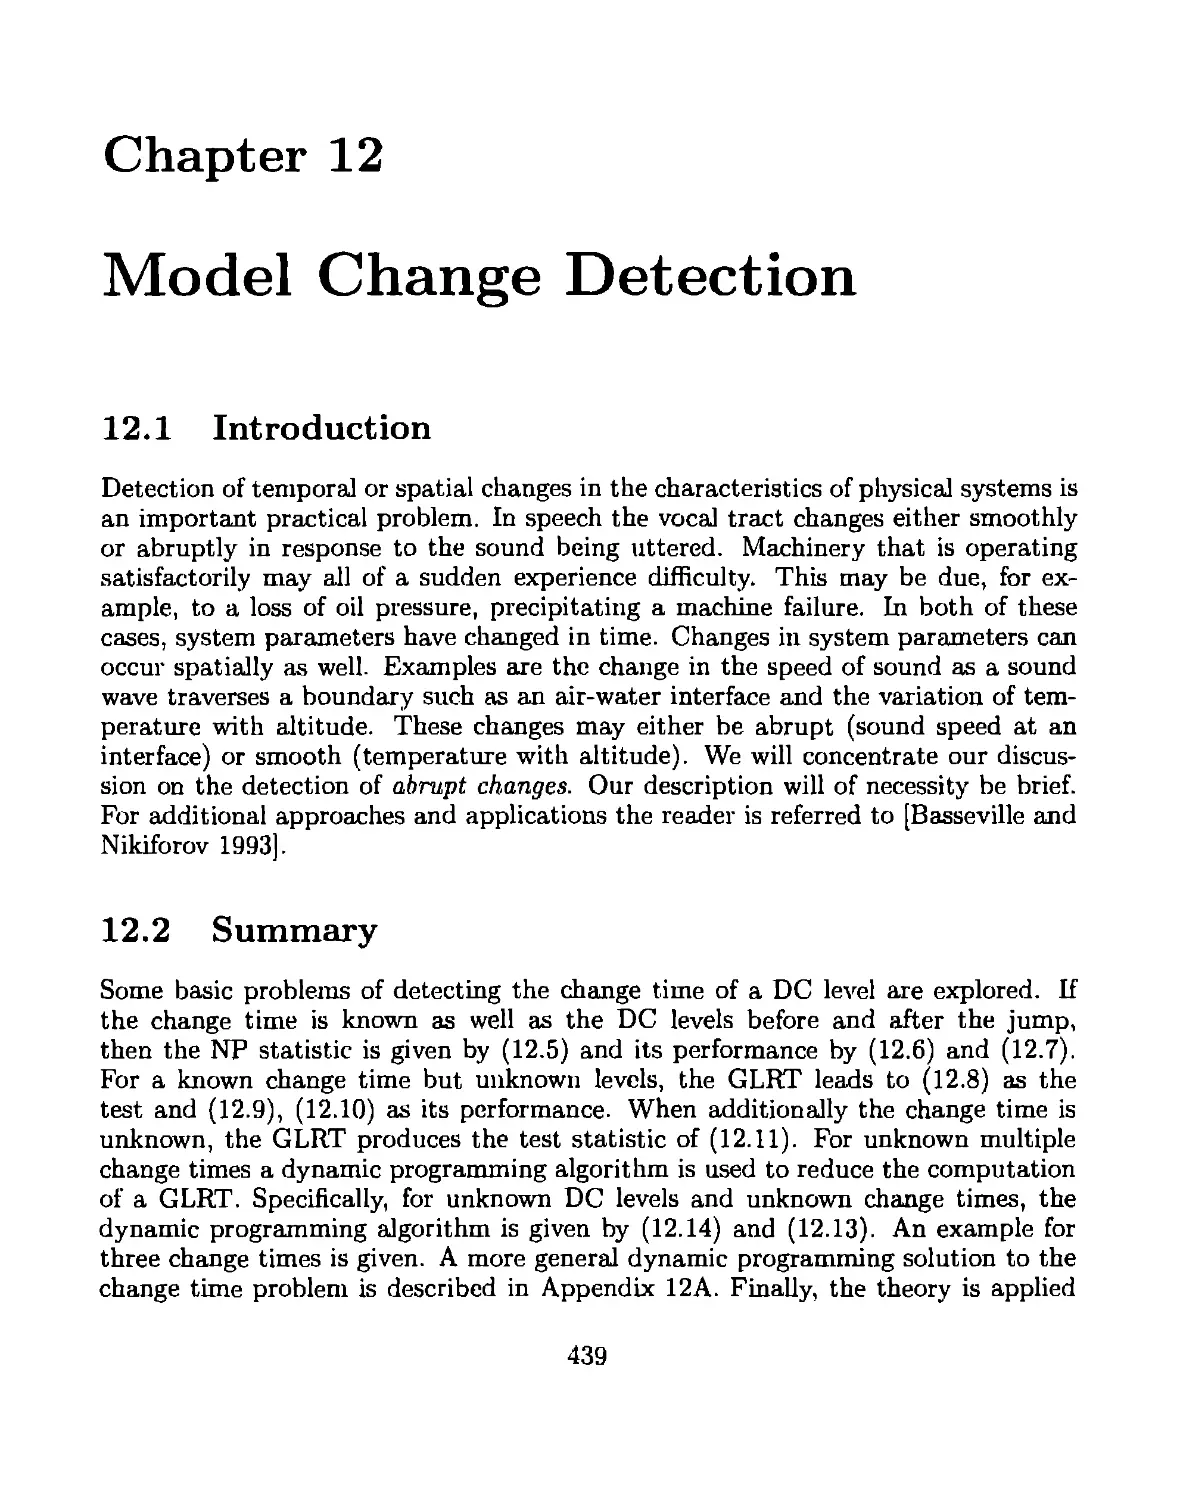 12 Model Change Detection
12.2 Summary